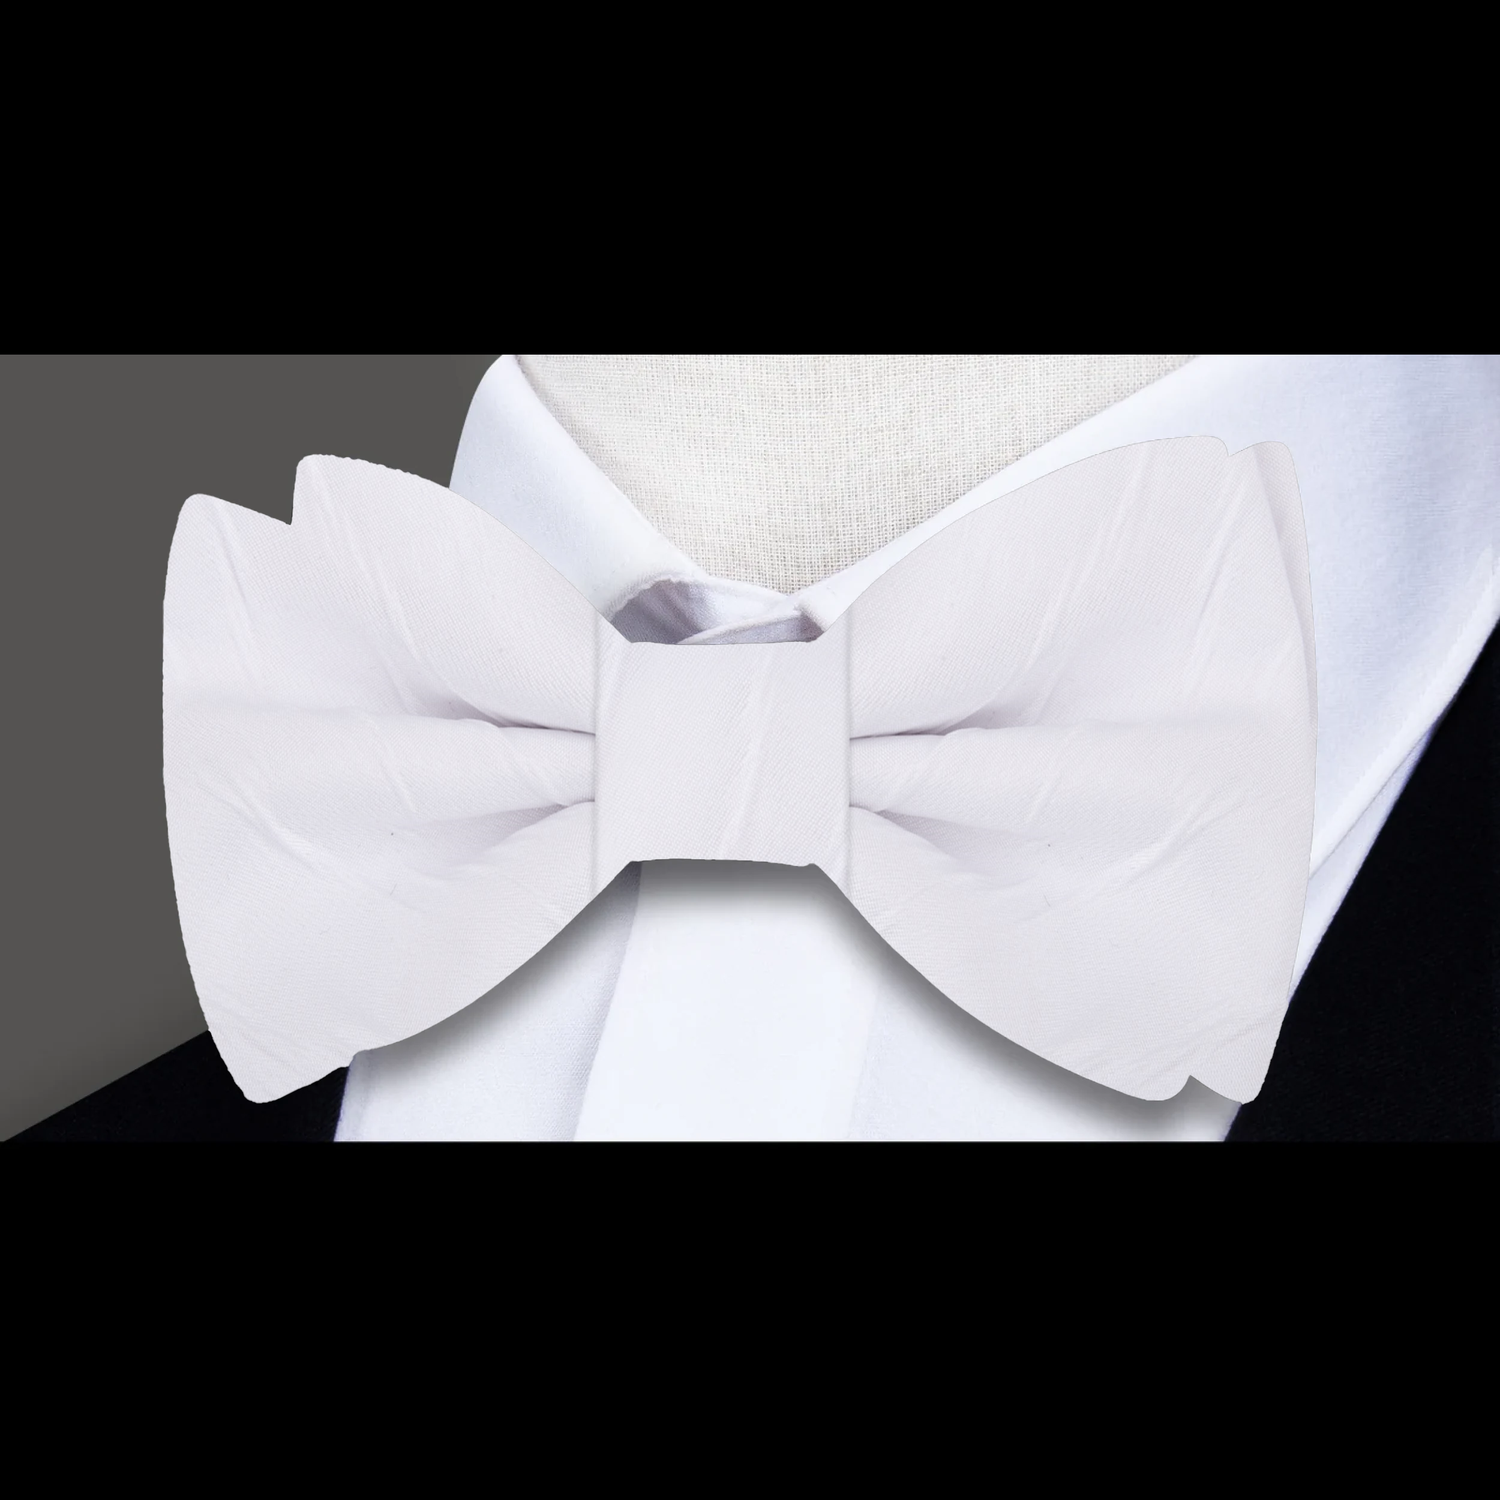 Soft White Texture Bow Tie  